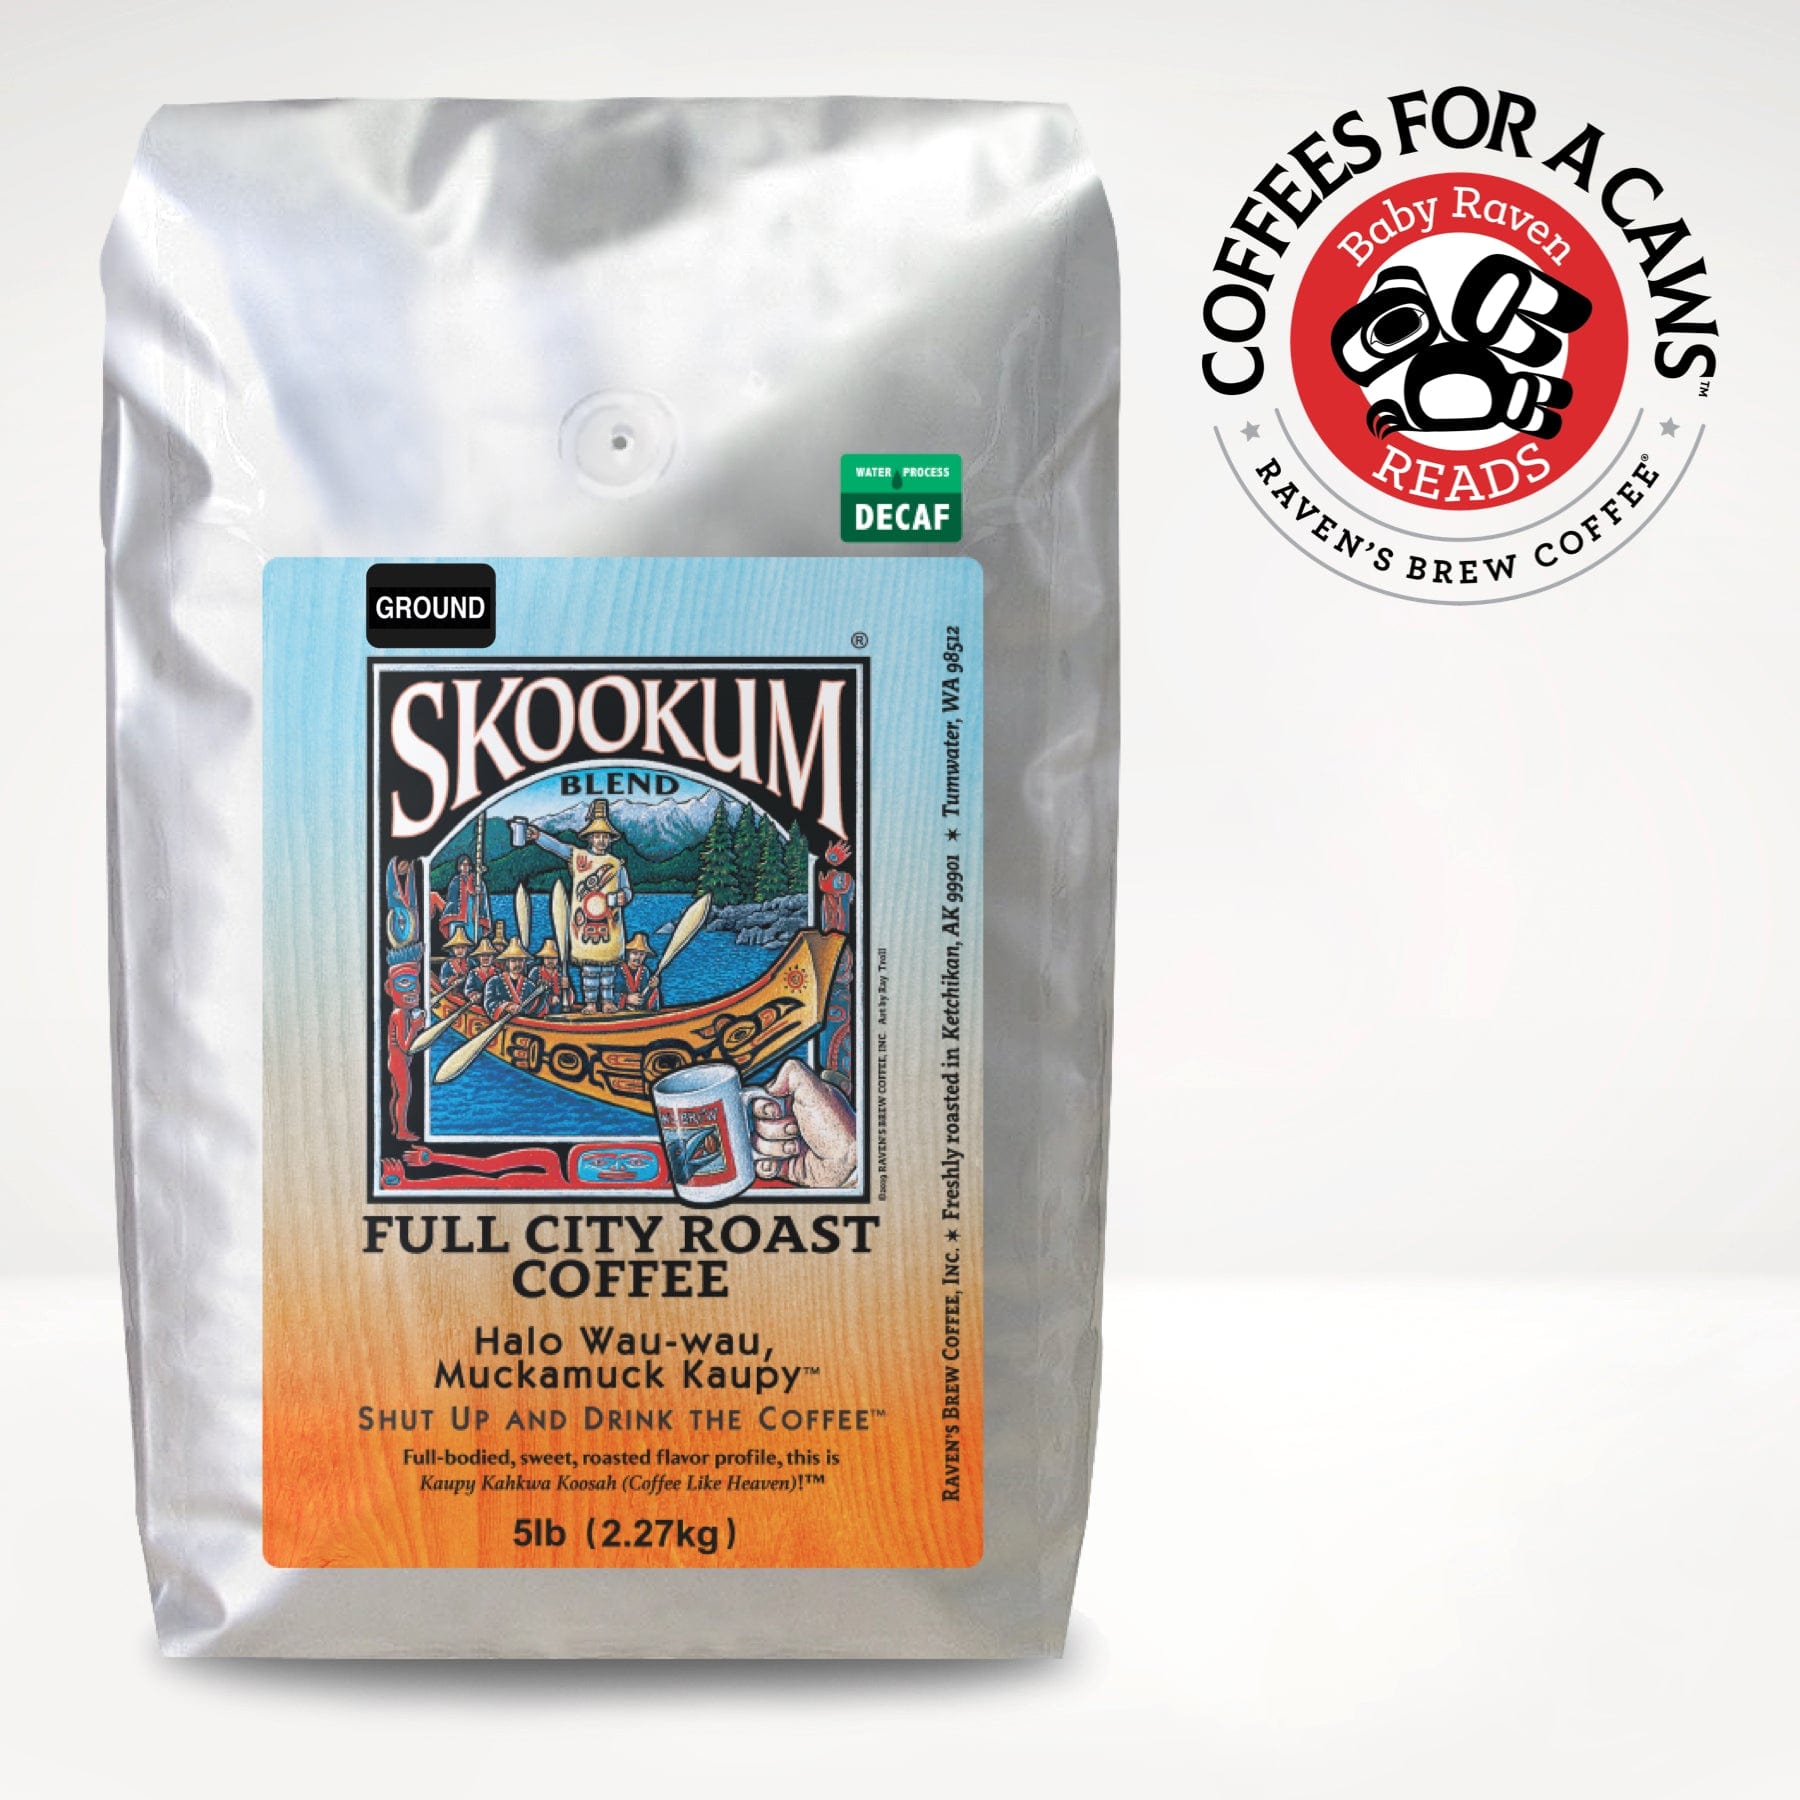 5lb Decaf Ground Skookum® Blend Full City Roast Coffee